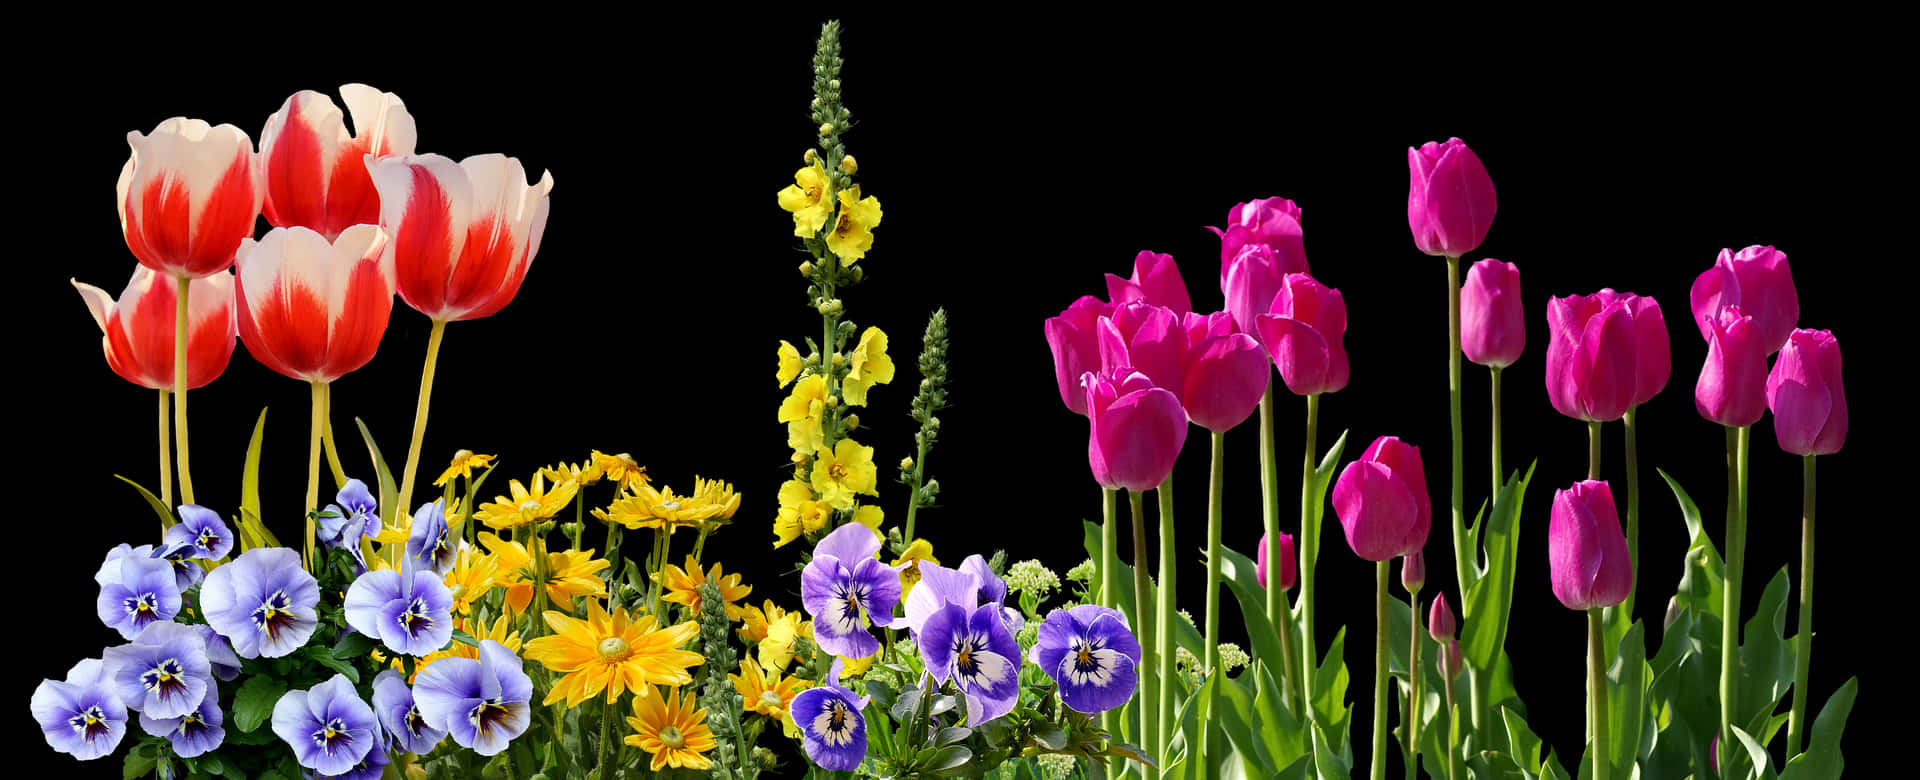 Colorful Spring Flowers Arrangement PNG image